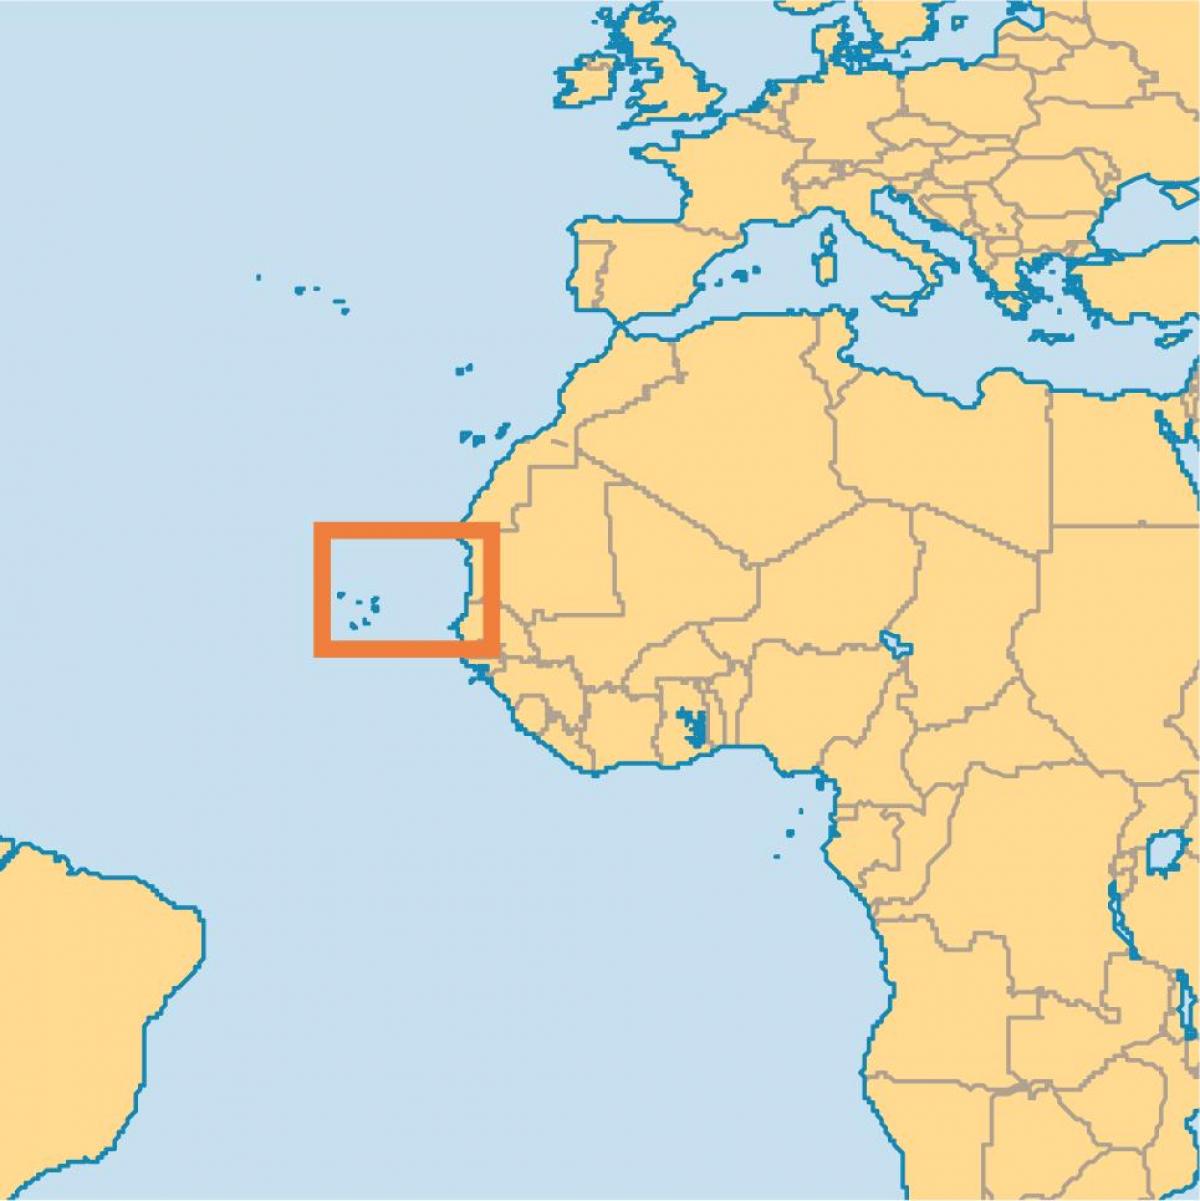 montre Cape Verde sou mond kat jeyografik